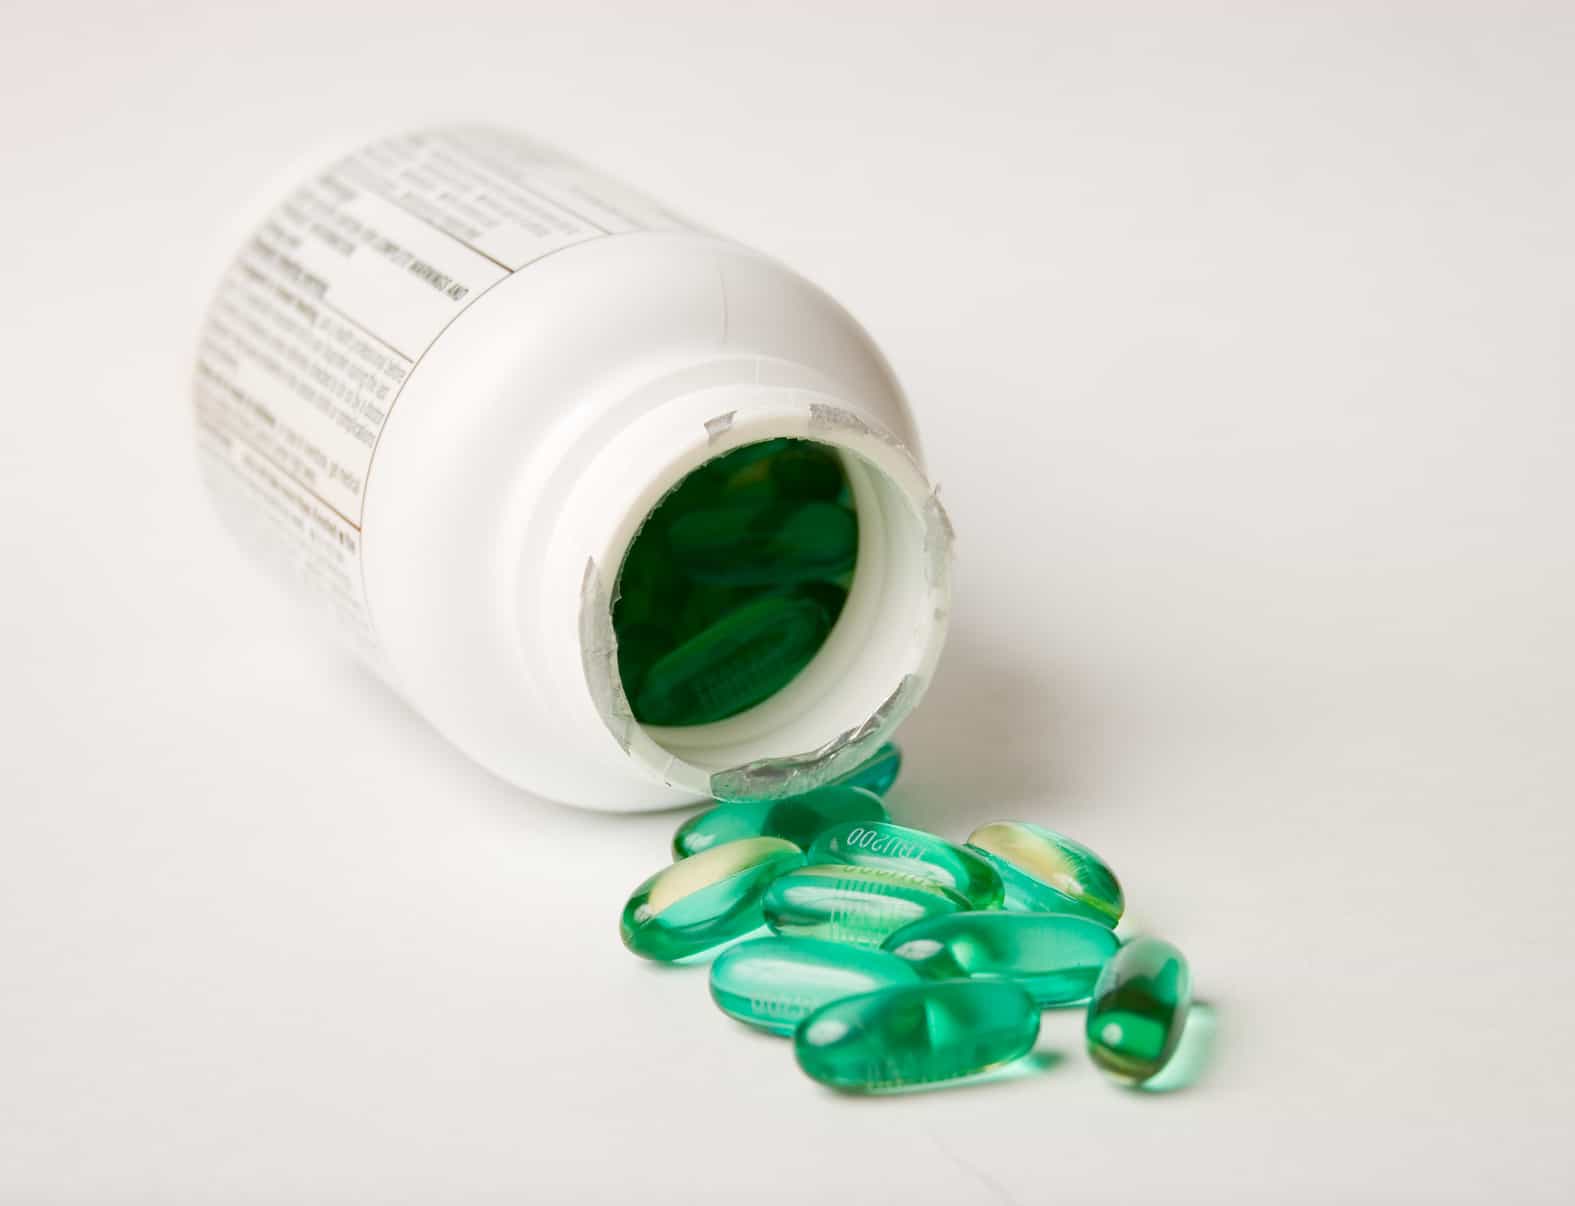 Green pills spilling out of OTC medicine bottle.